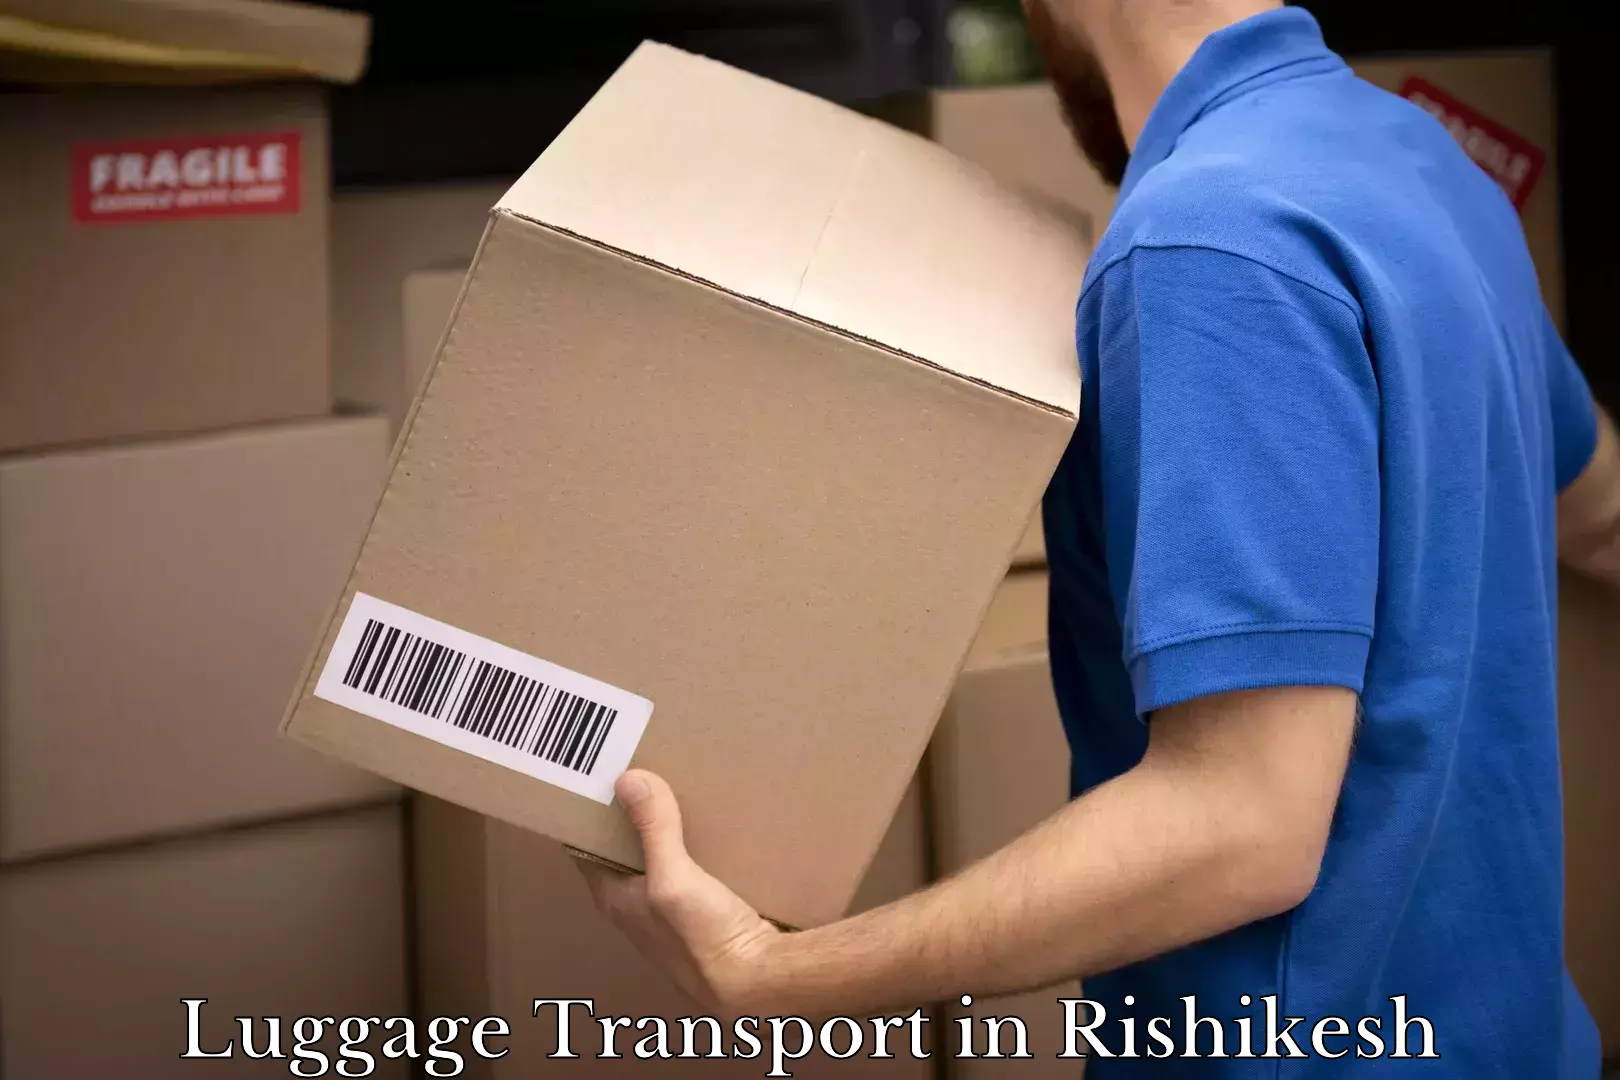 Luggage transport rates in Rishikesh